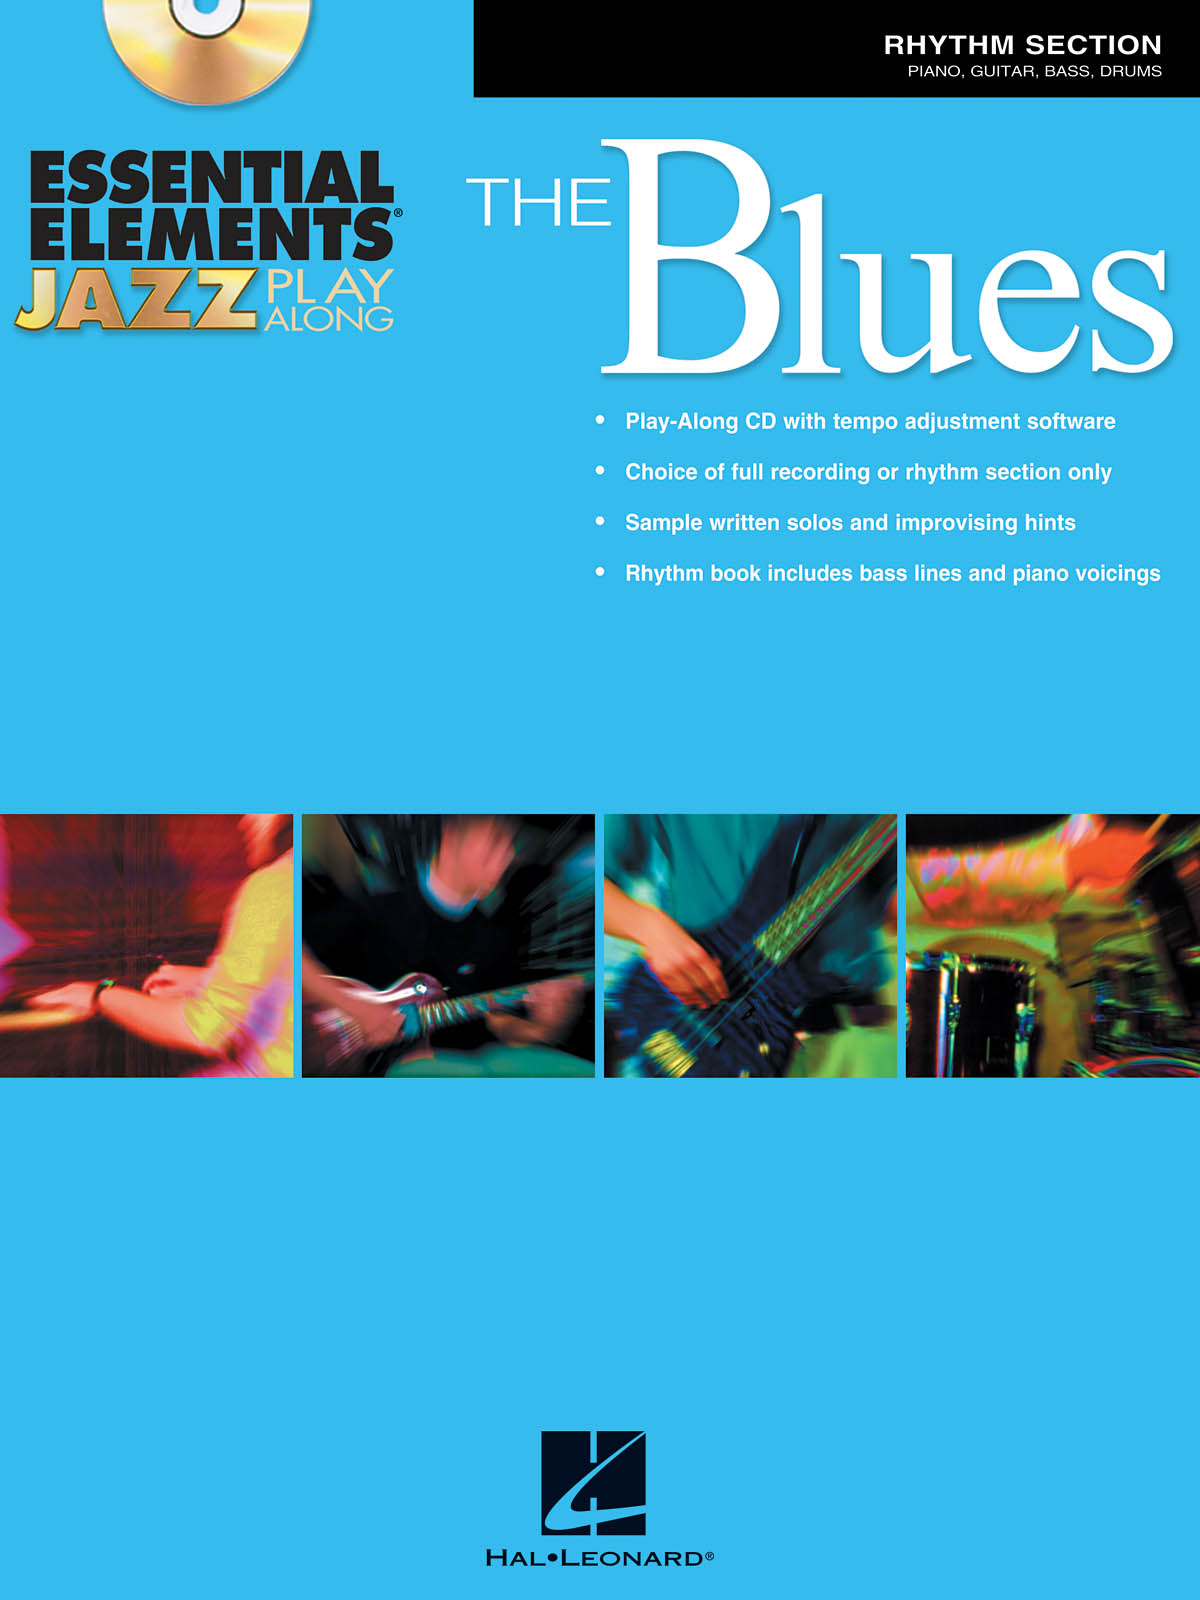 Essential Elements Jazz Play Along - The Blues - Rhythm Section - noty pro bicí